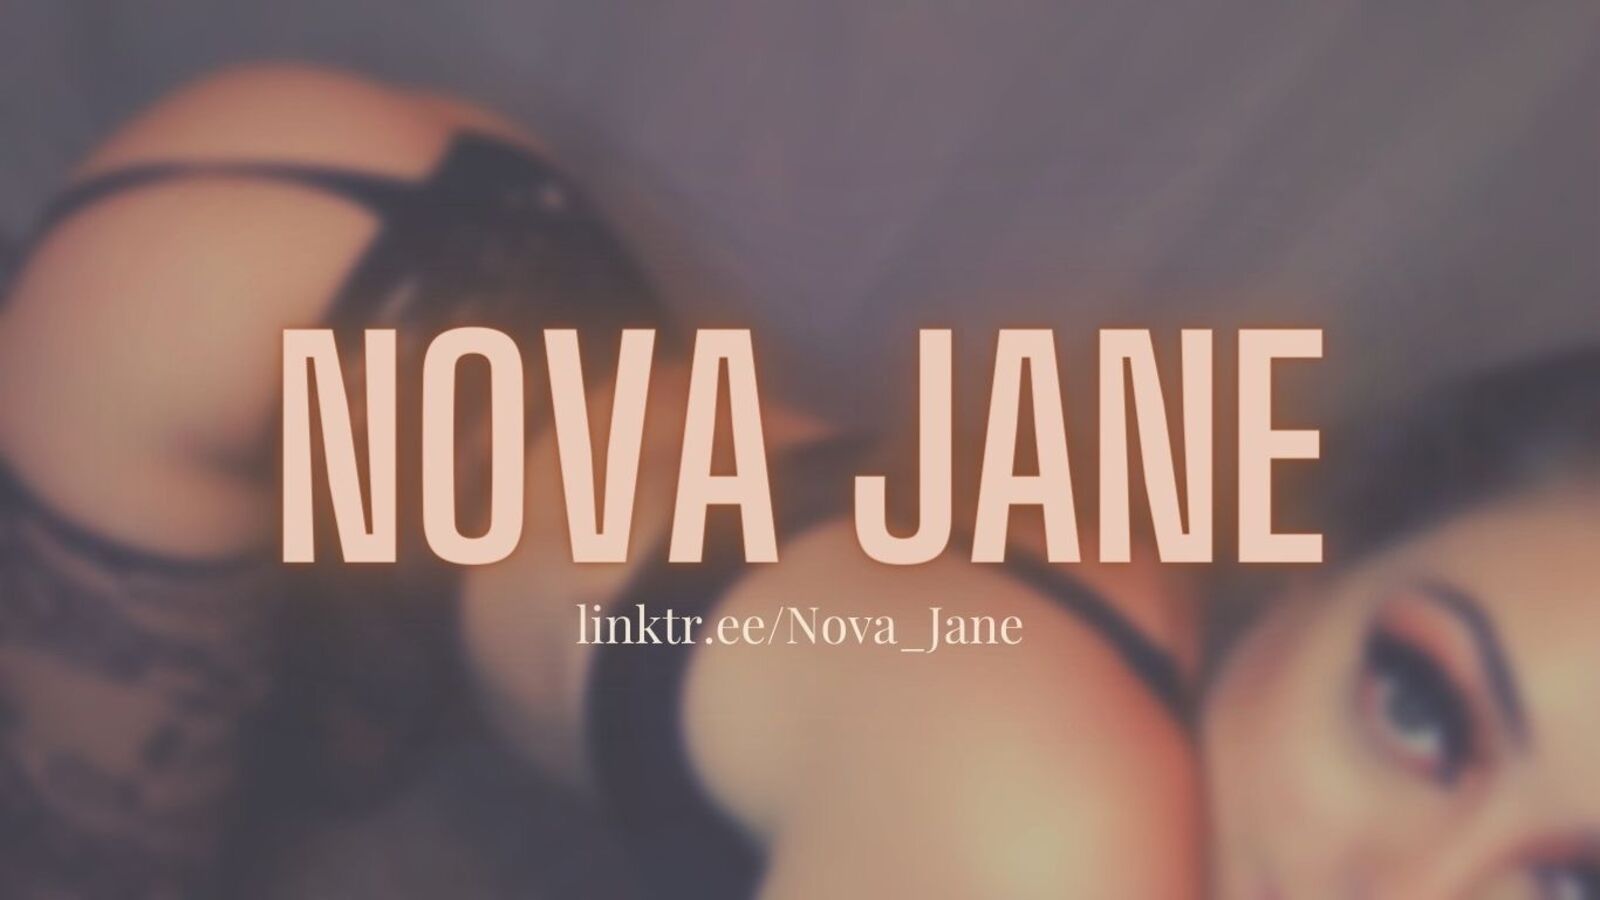 See Nova Jane profile